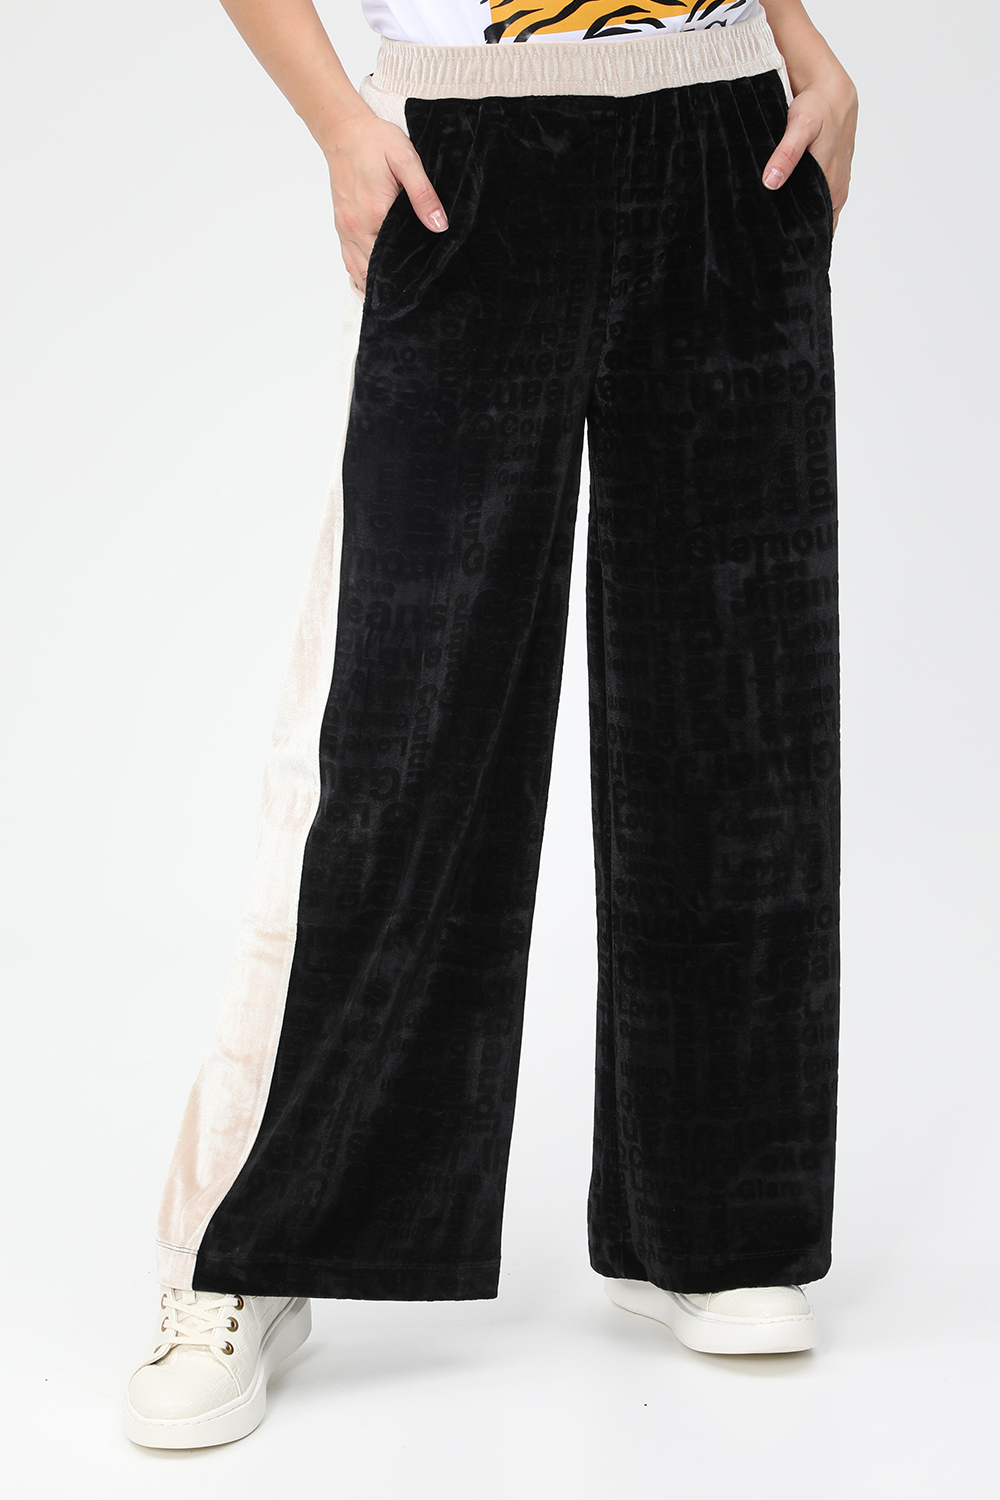 GAUDI – Γυναικείο παντελόνι φόρμας GAUDI JEANS Collect μαύρο εκρού 1825811.0-0105